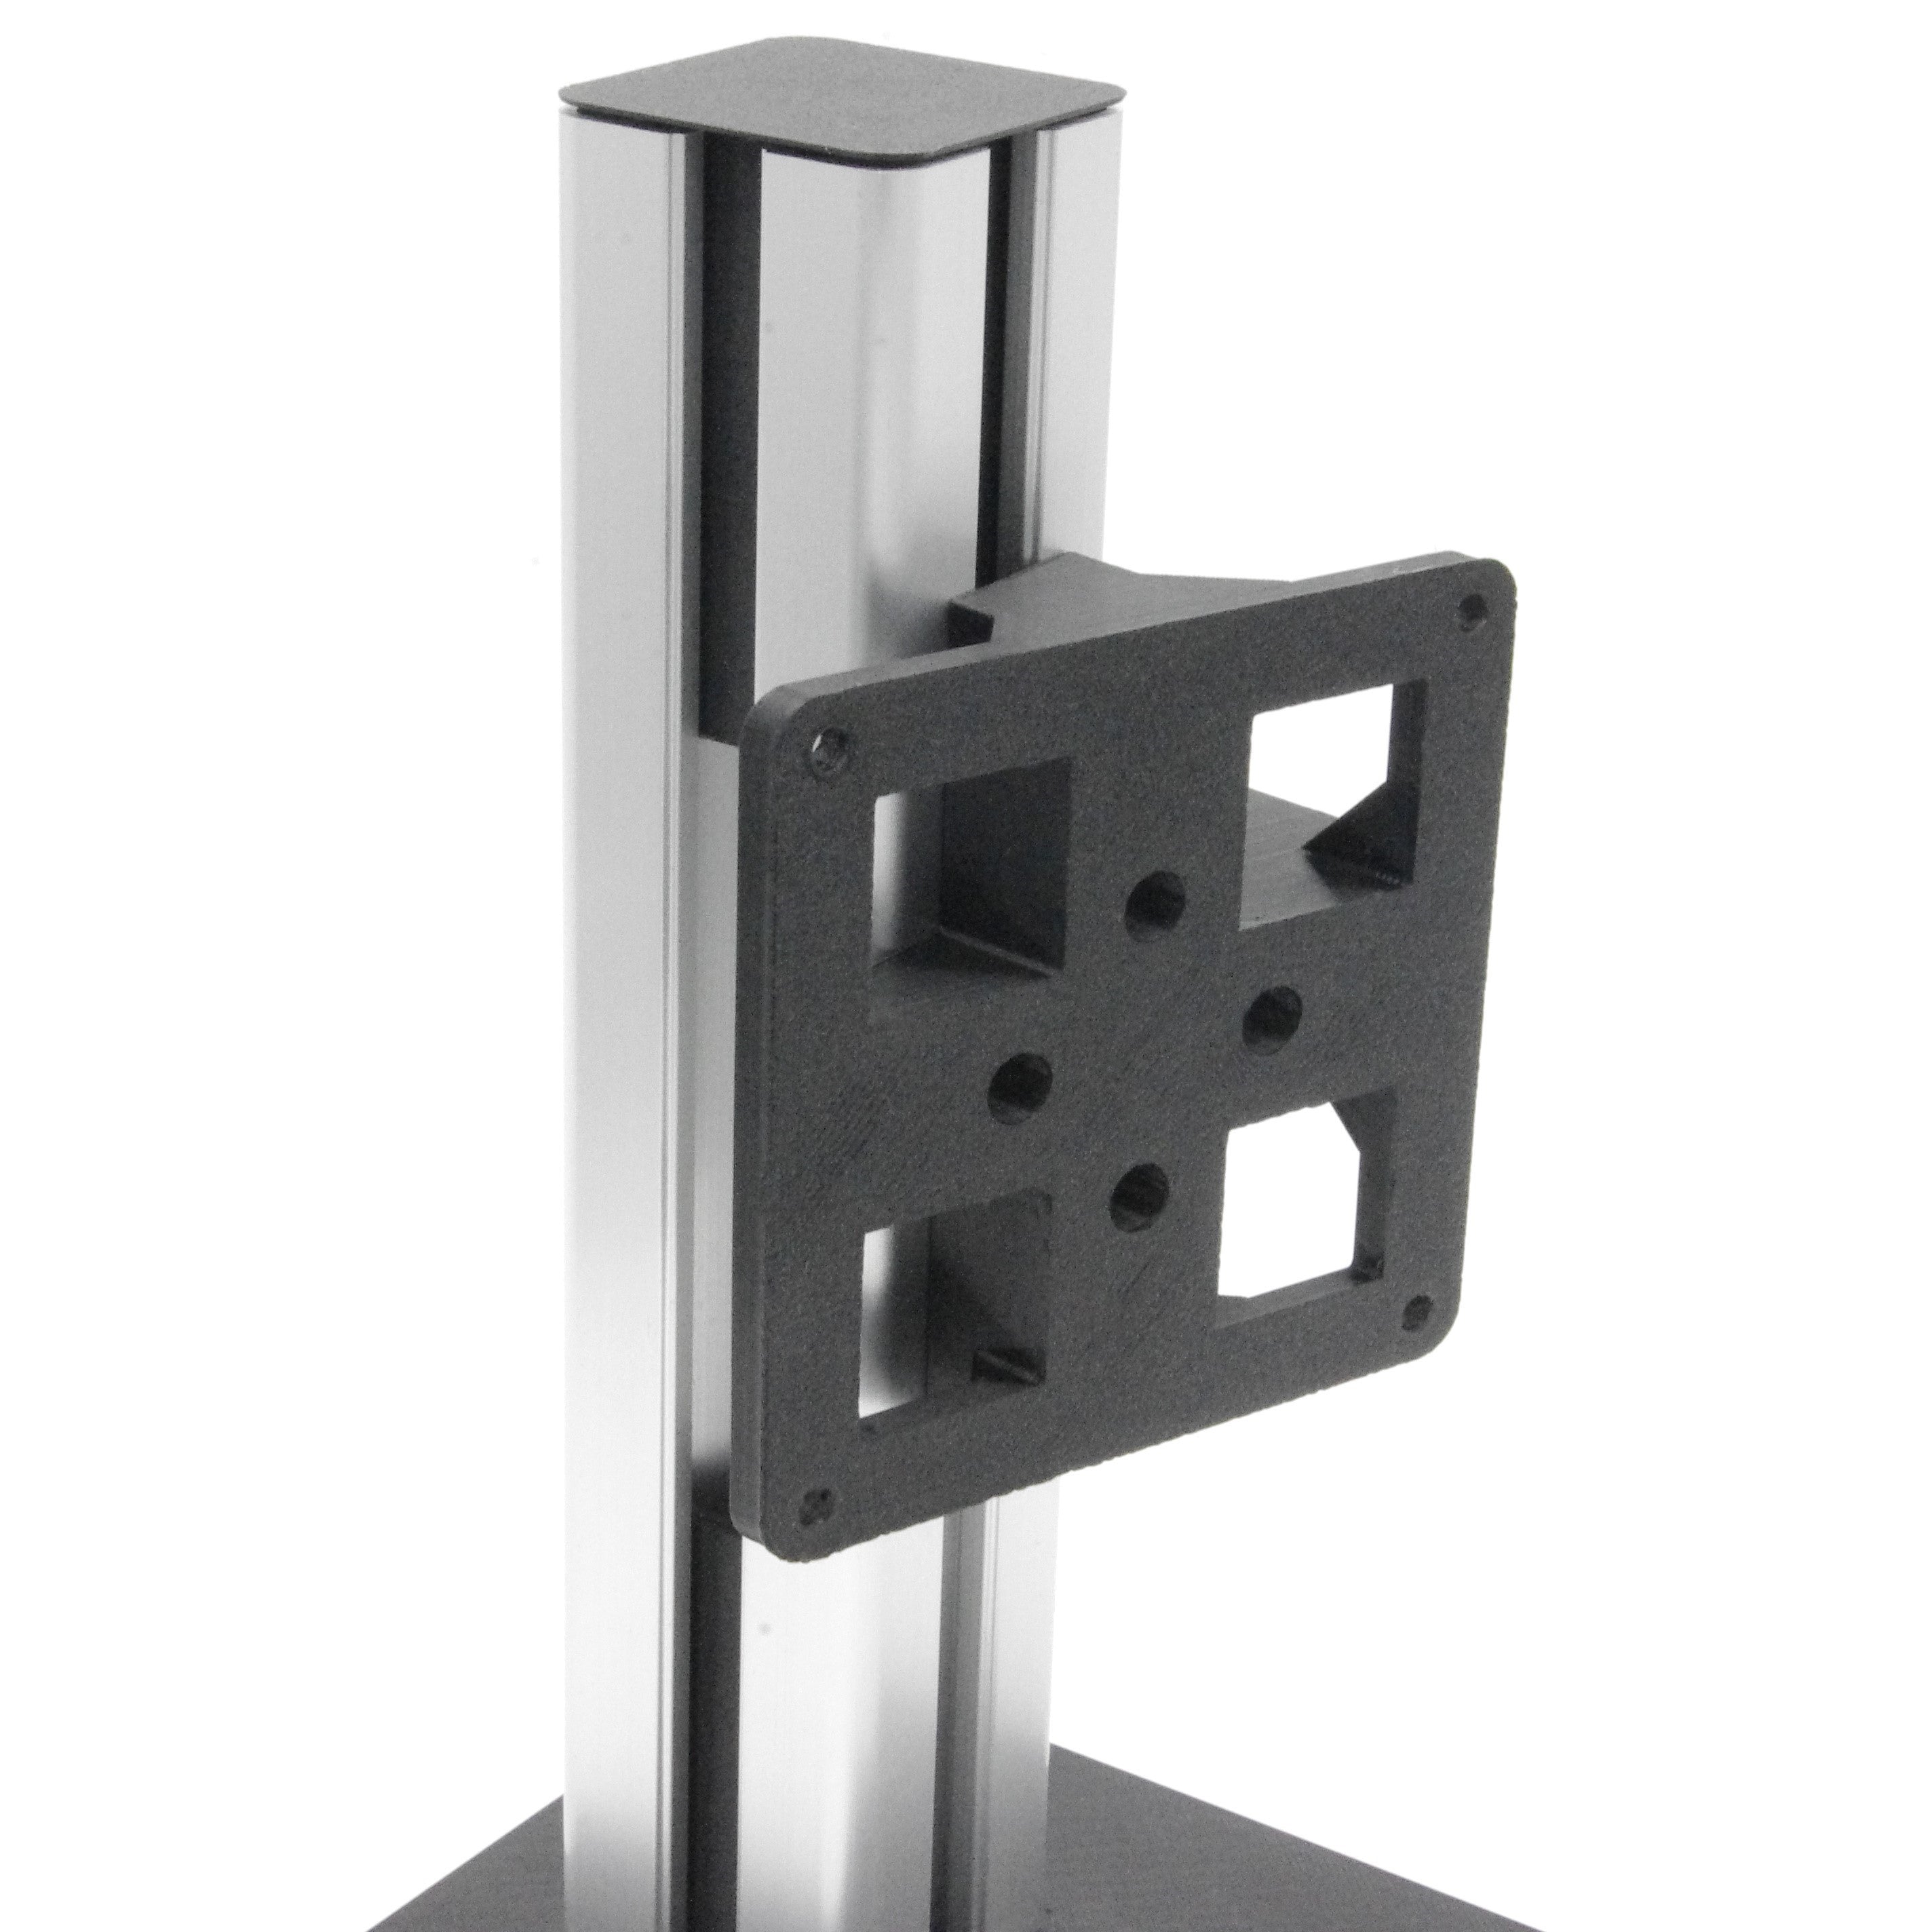 Universal 40x40 aluminum profile mount for BoxOneRacing button boxes